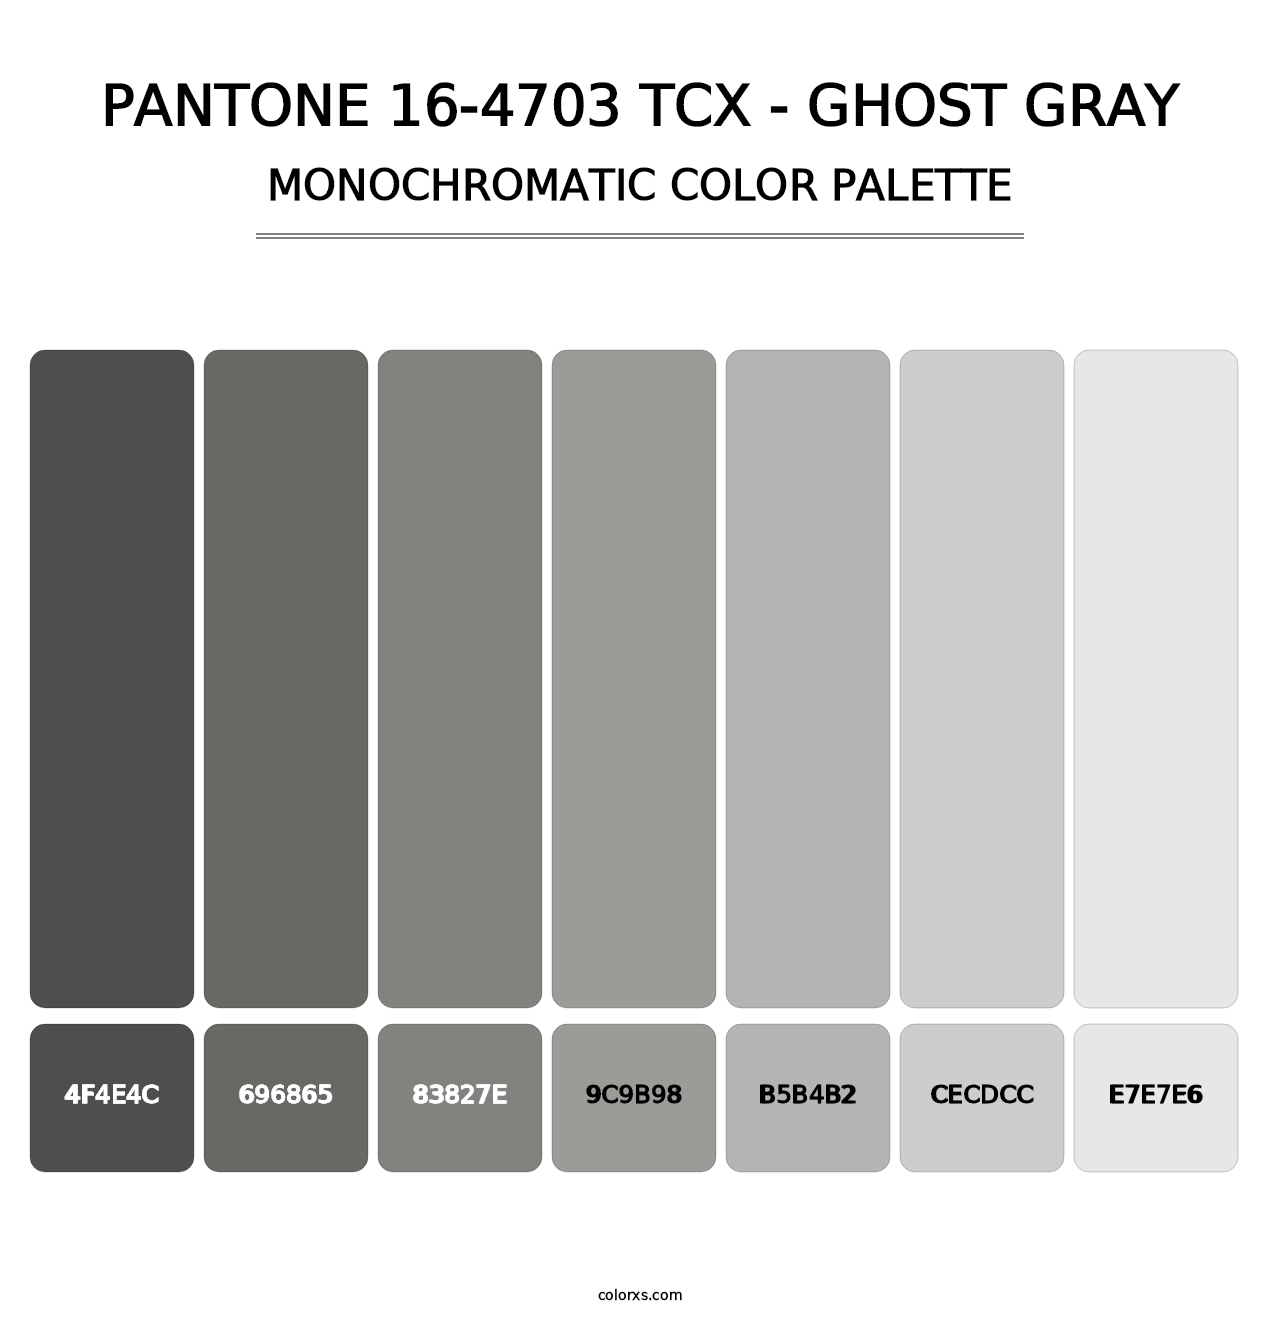 PANTONE 16-4703 TCX - Ghost Gray - Monochromatic Color Palette